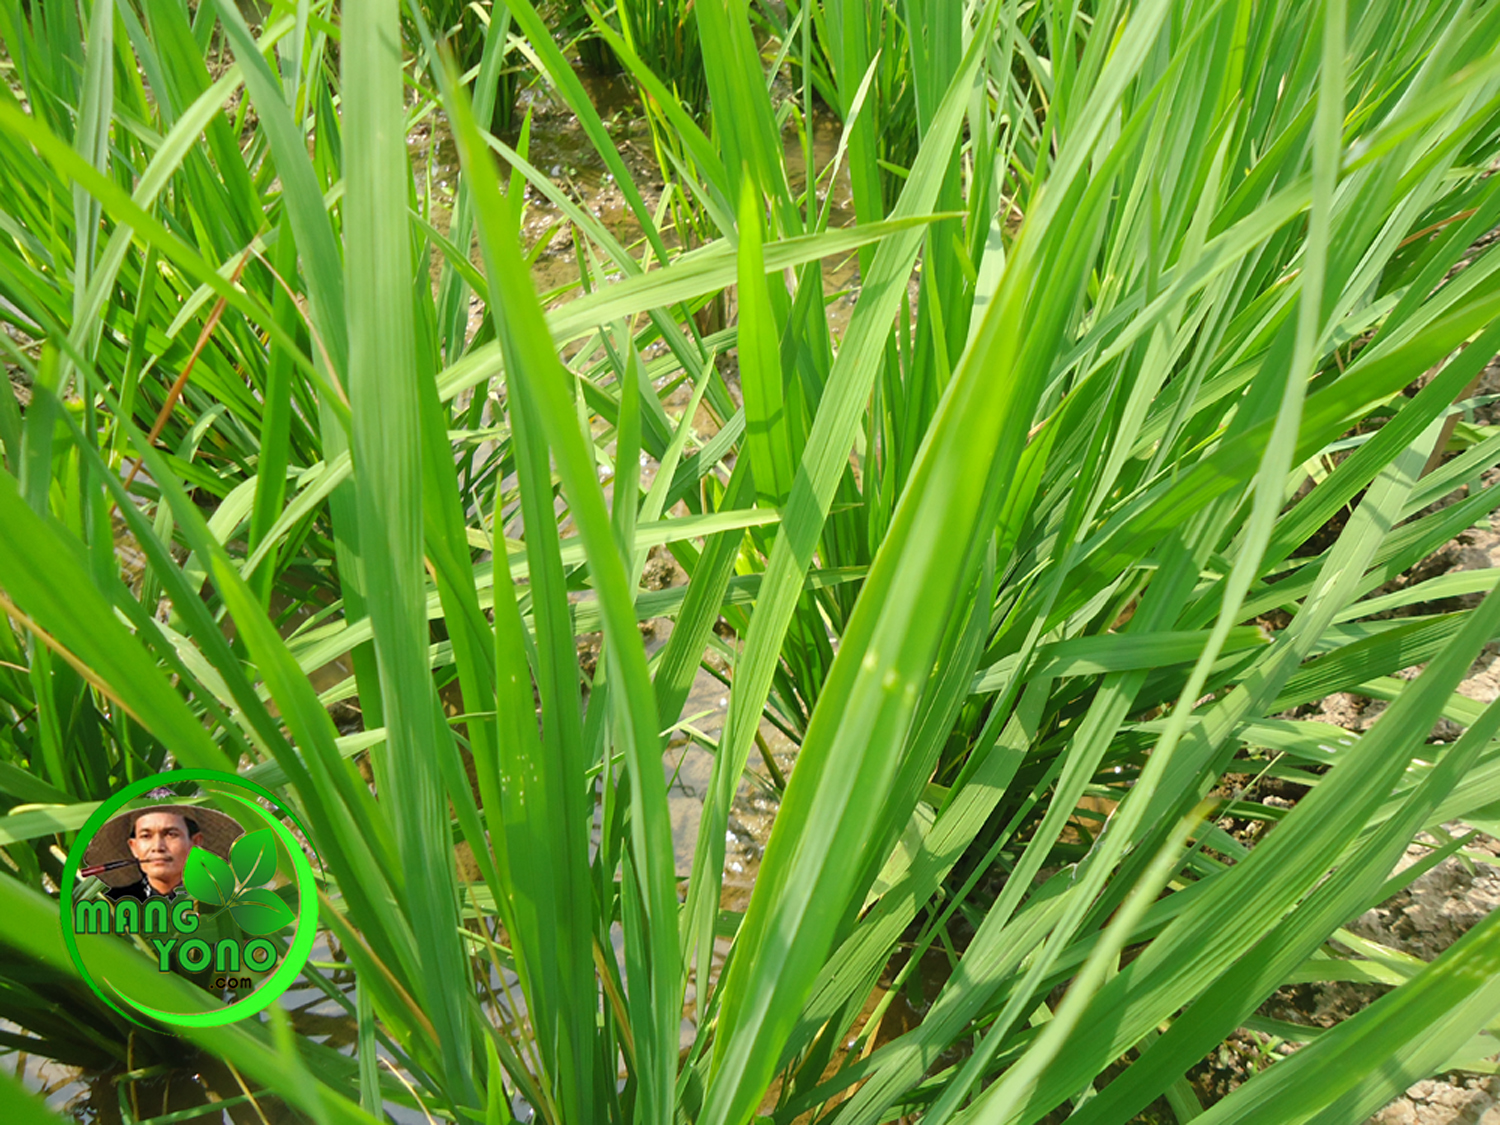 Mencoba menggunakan pupuk NPK Mutiara untuk tanaman padi. ~ Blog Mang Yono